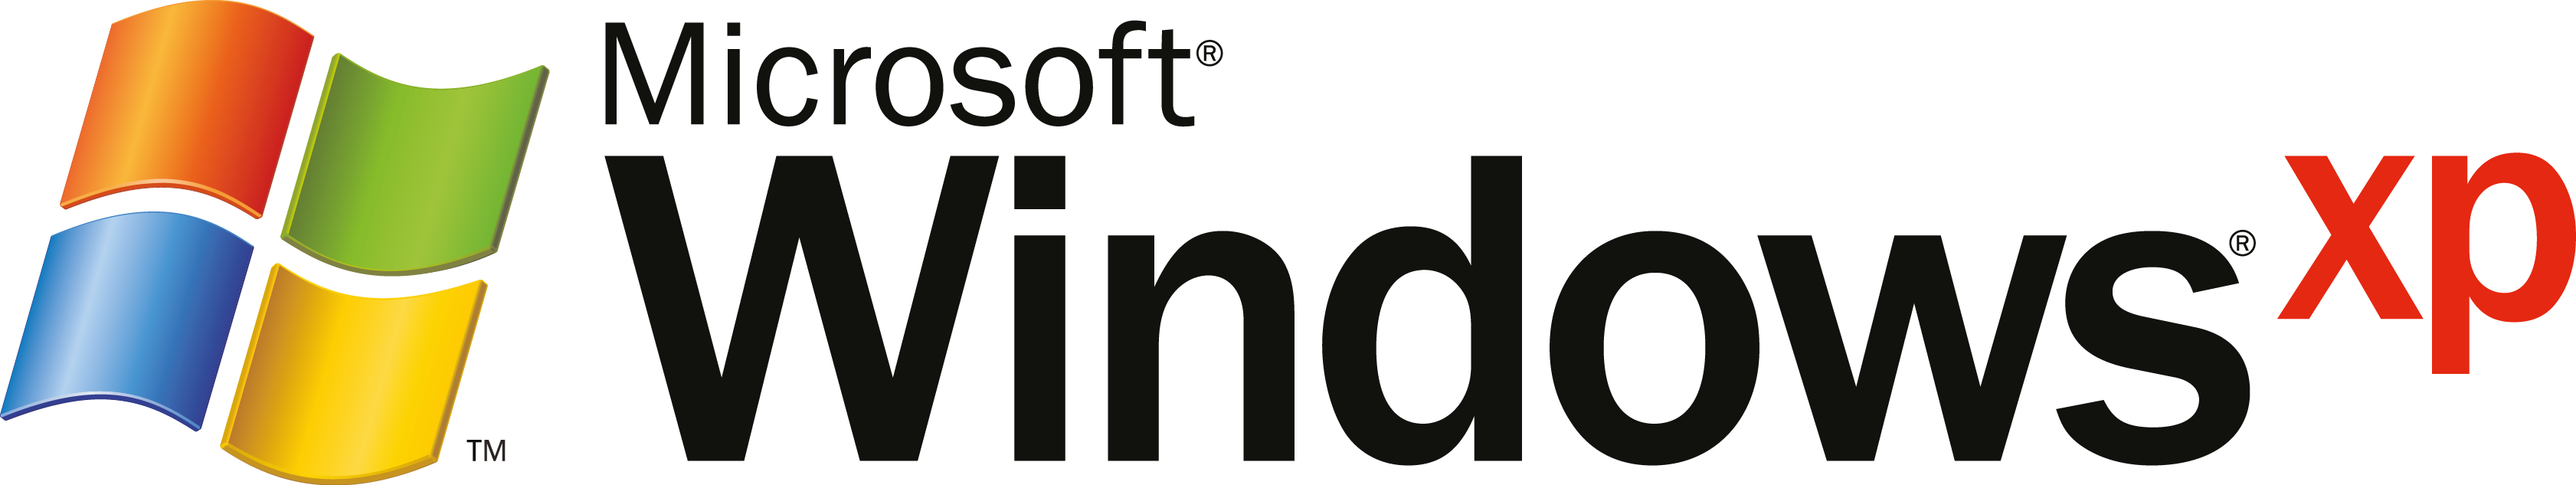 Windows Xp Logo Png - Microsoft Windows, Transparent background PNG HD thumbnail